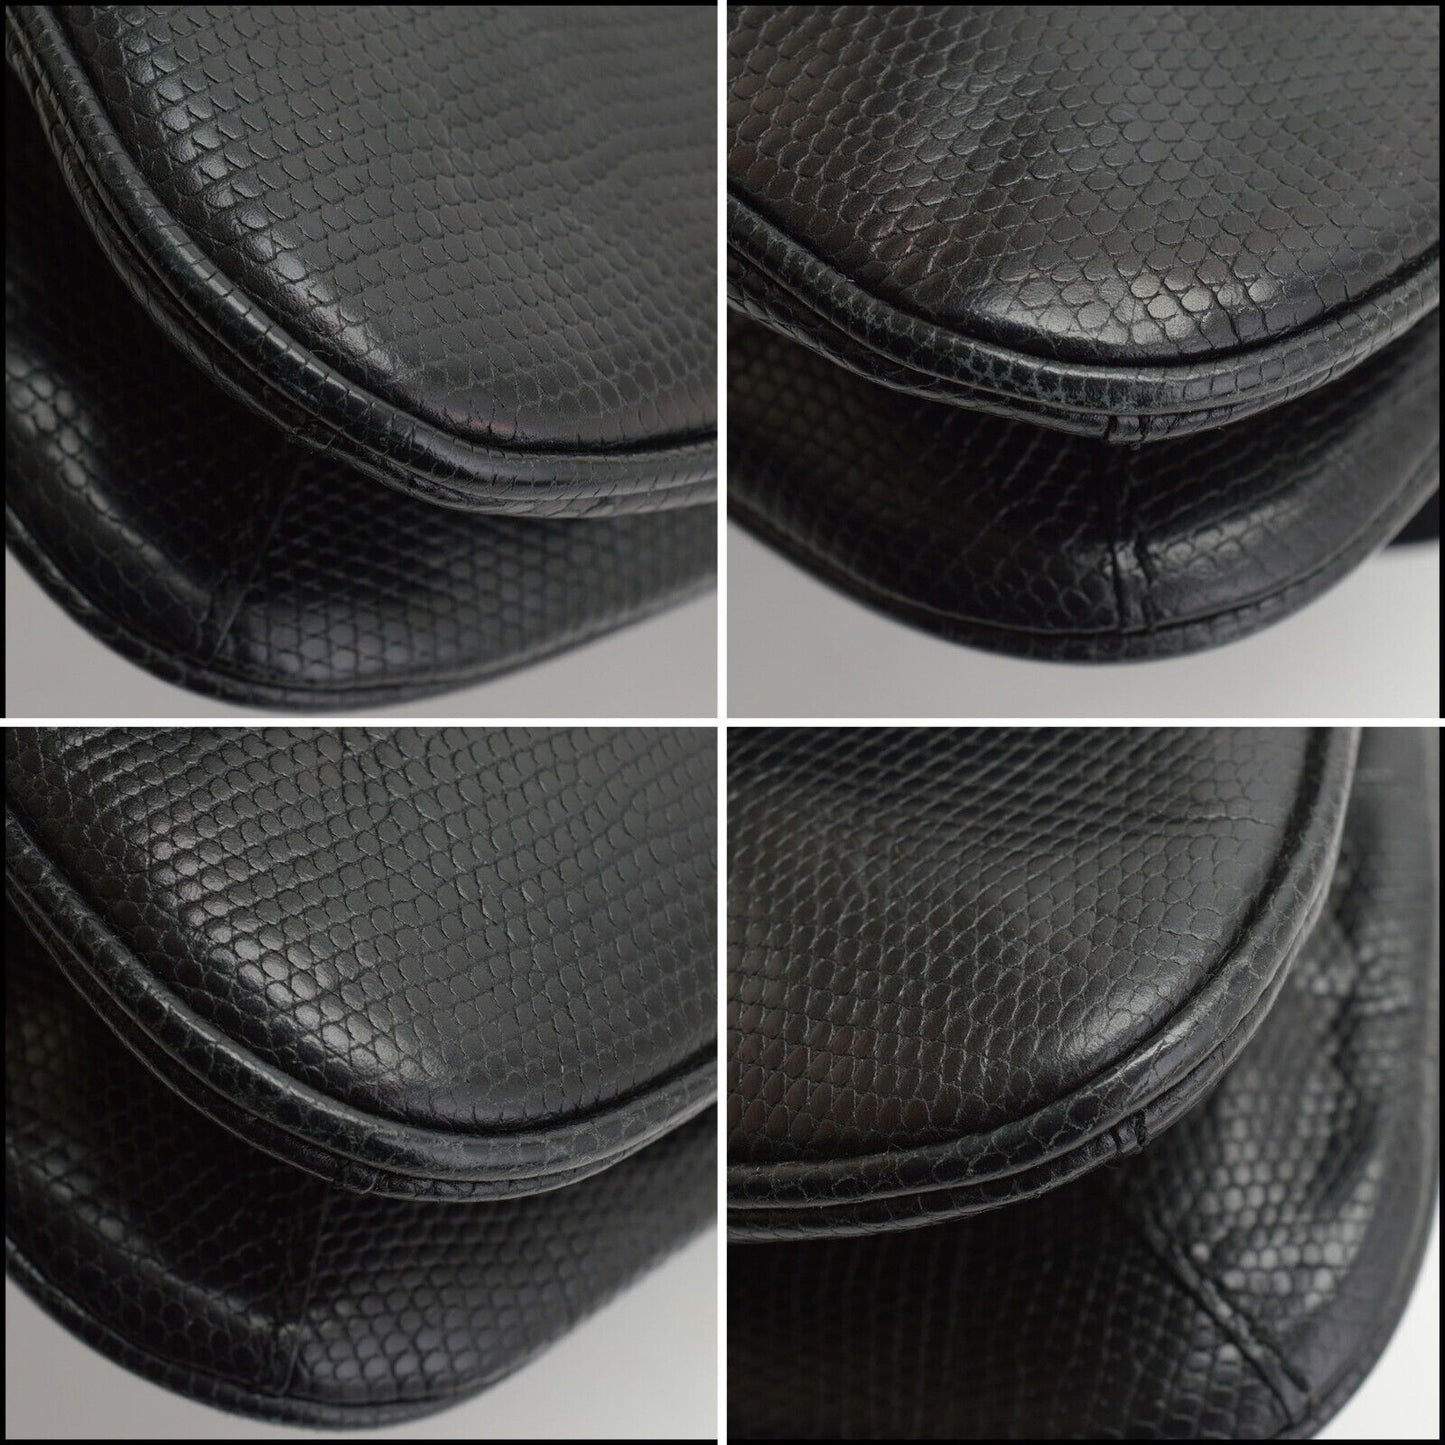 RDC13673 Authentic BURBERRY Black Lizard Embossed Small Baguette Shoulder Bag